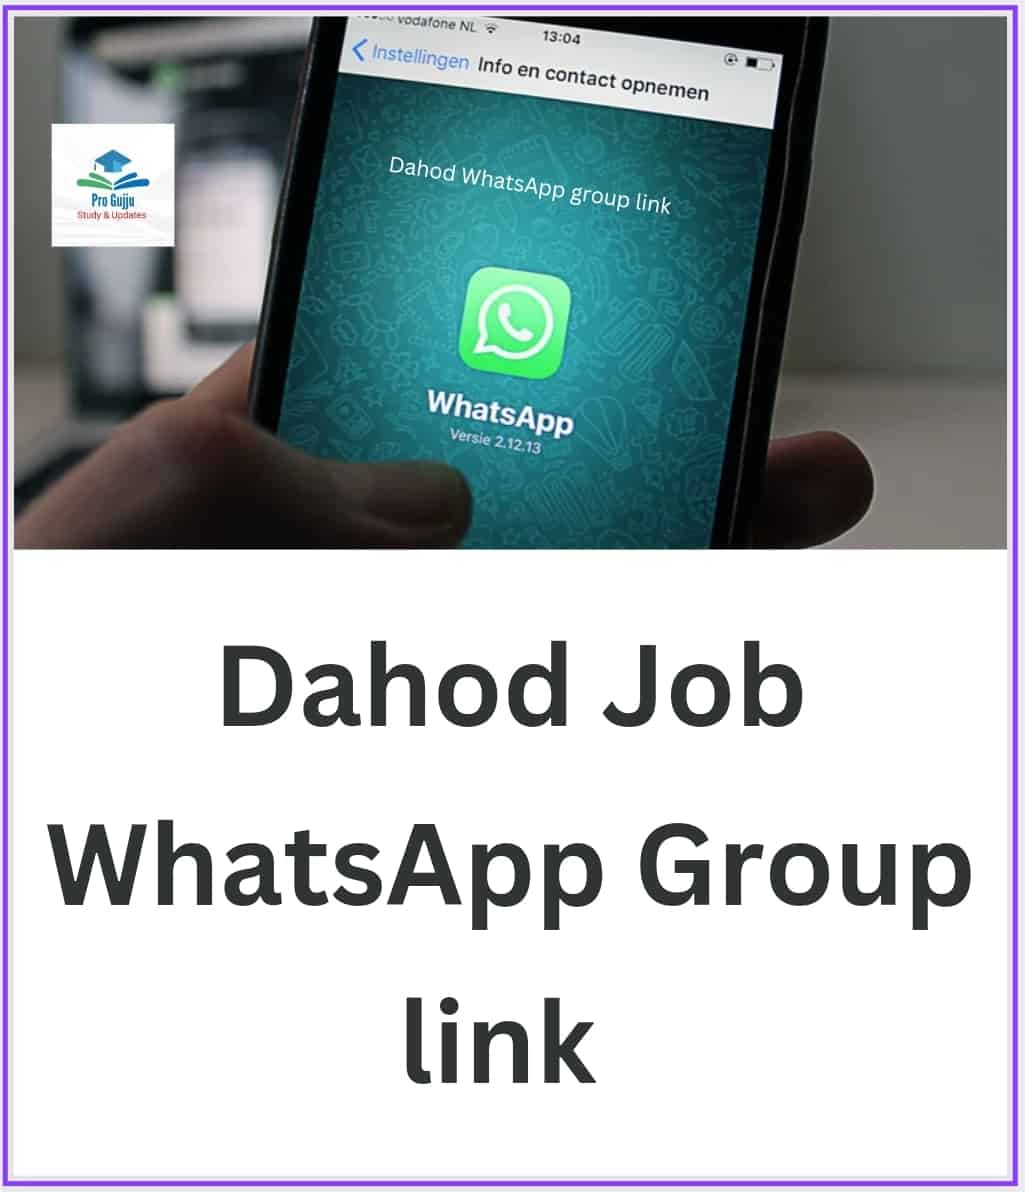 Dahod Job WhatsApp group Link